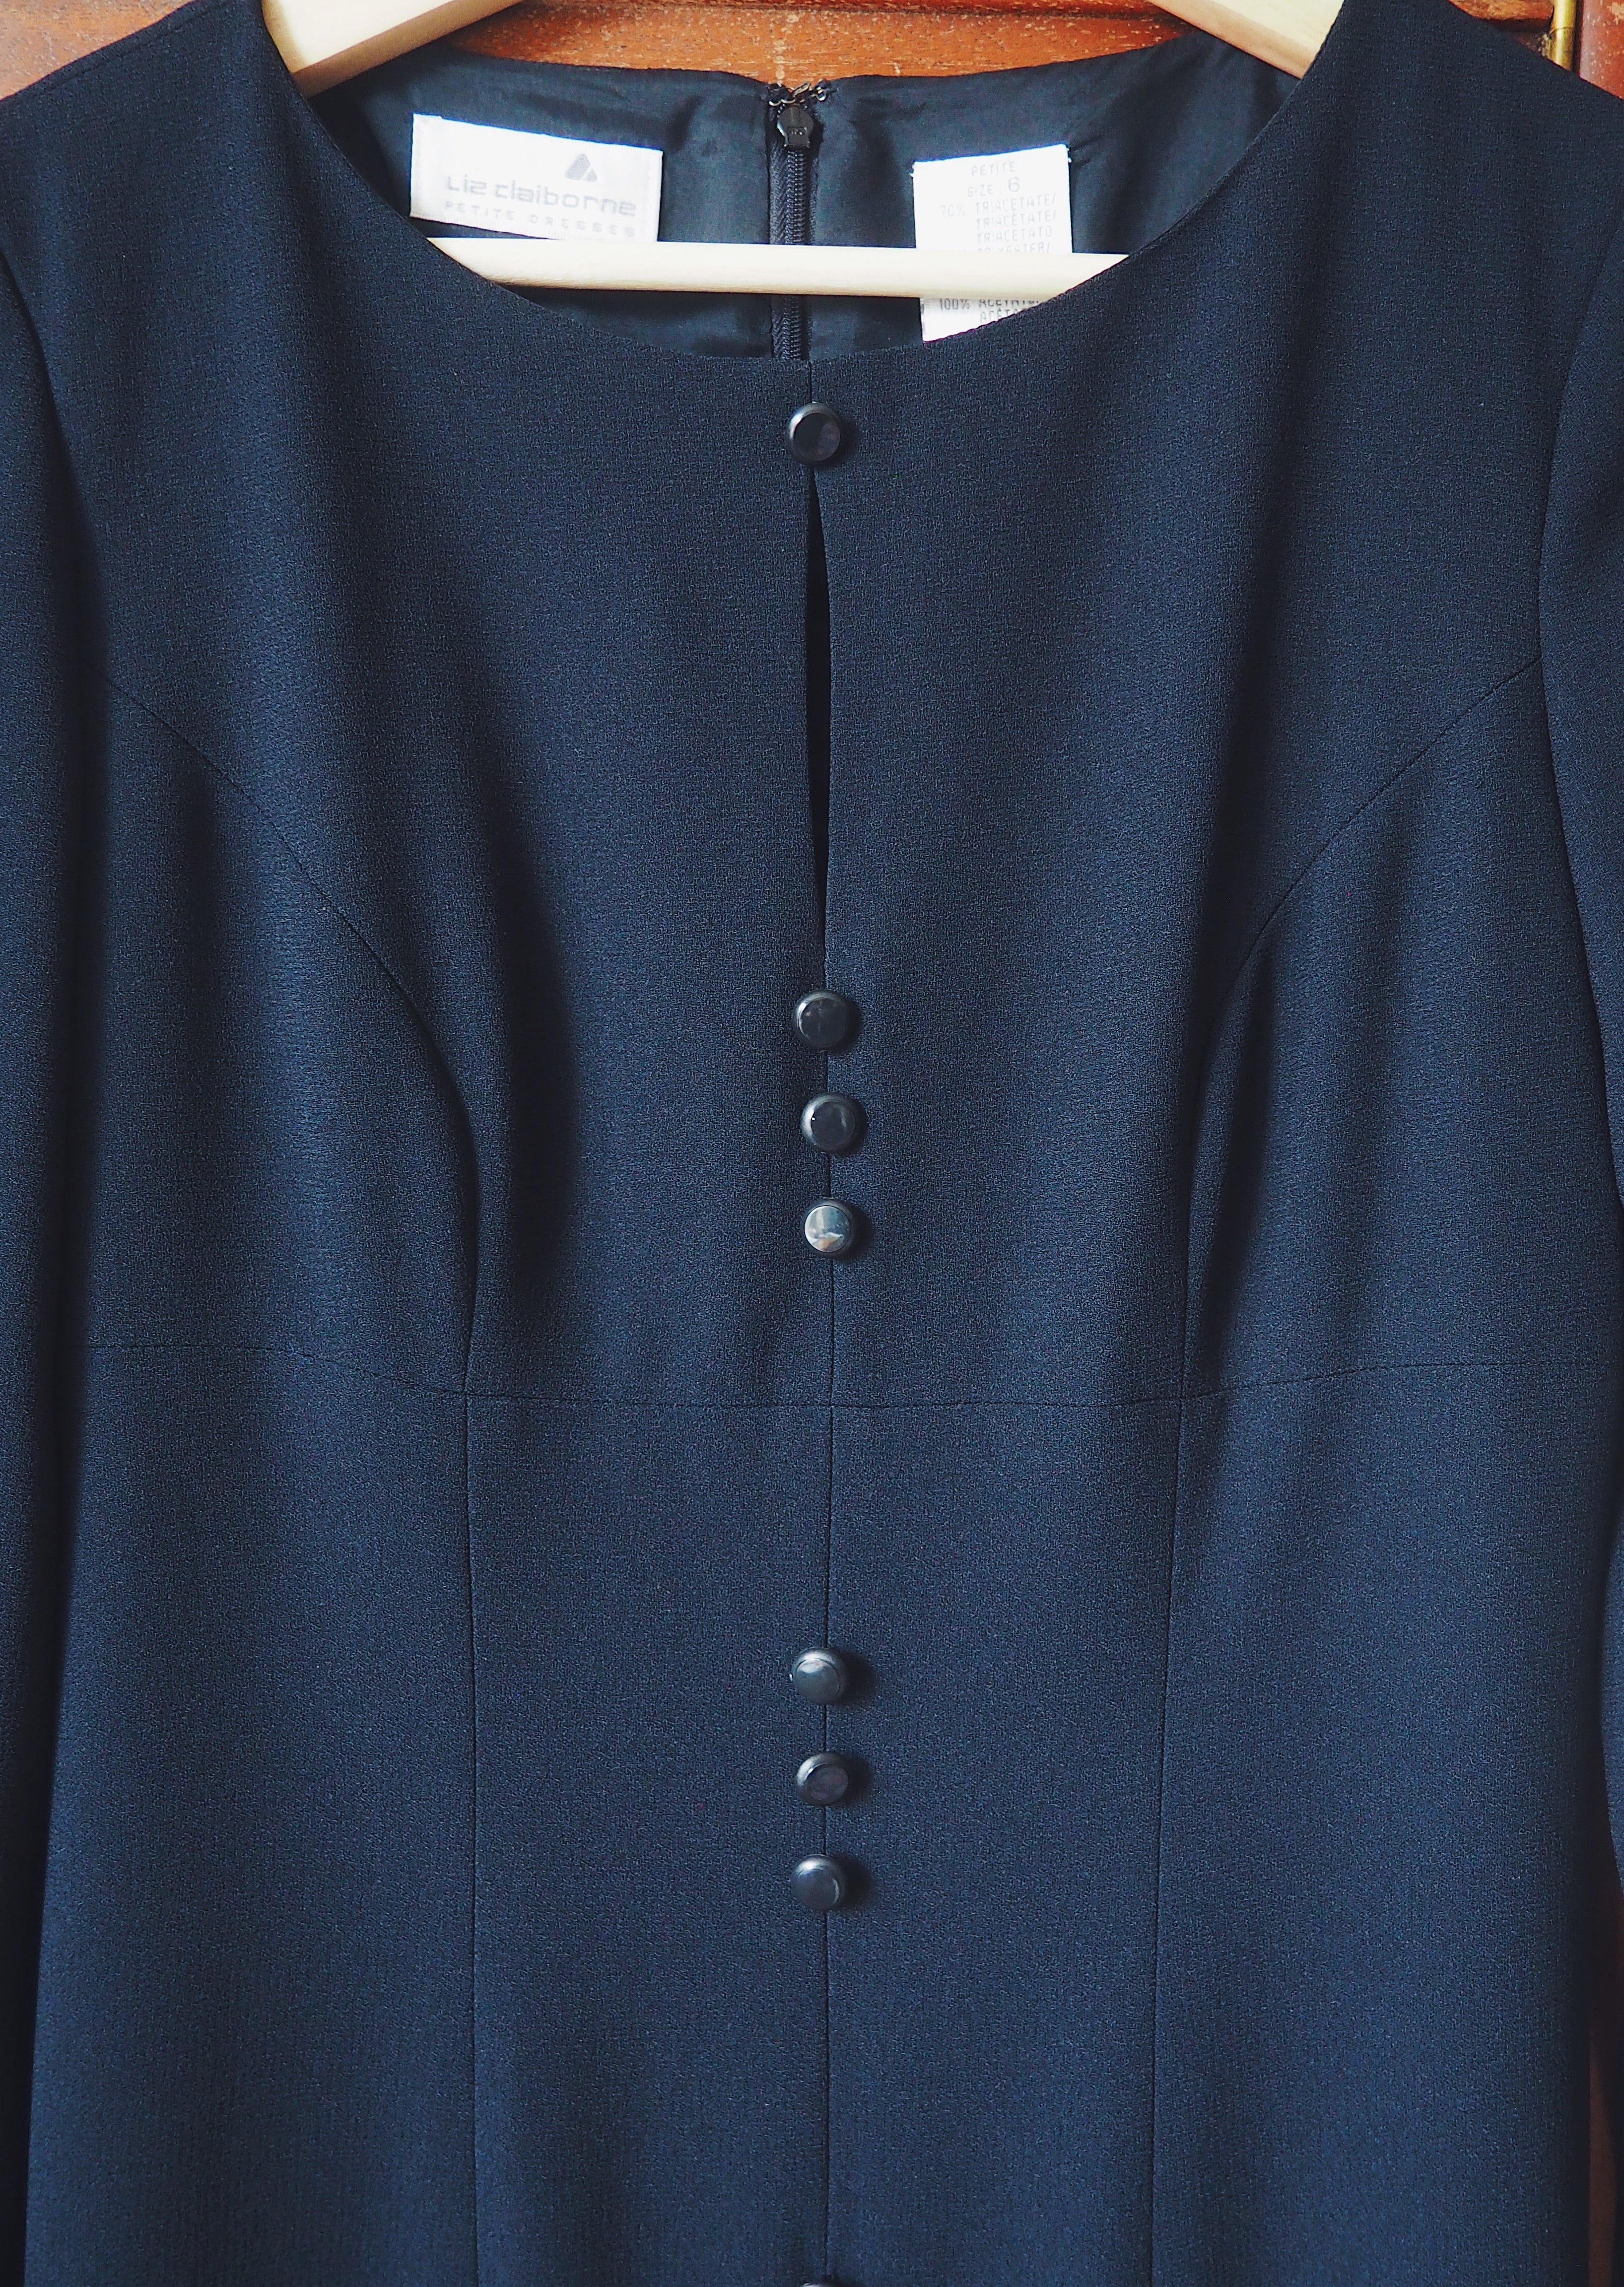 Vintage Liz Claiborne Button Midi Dress